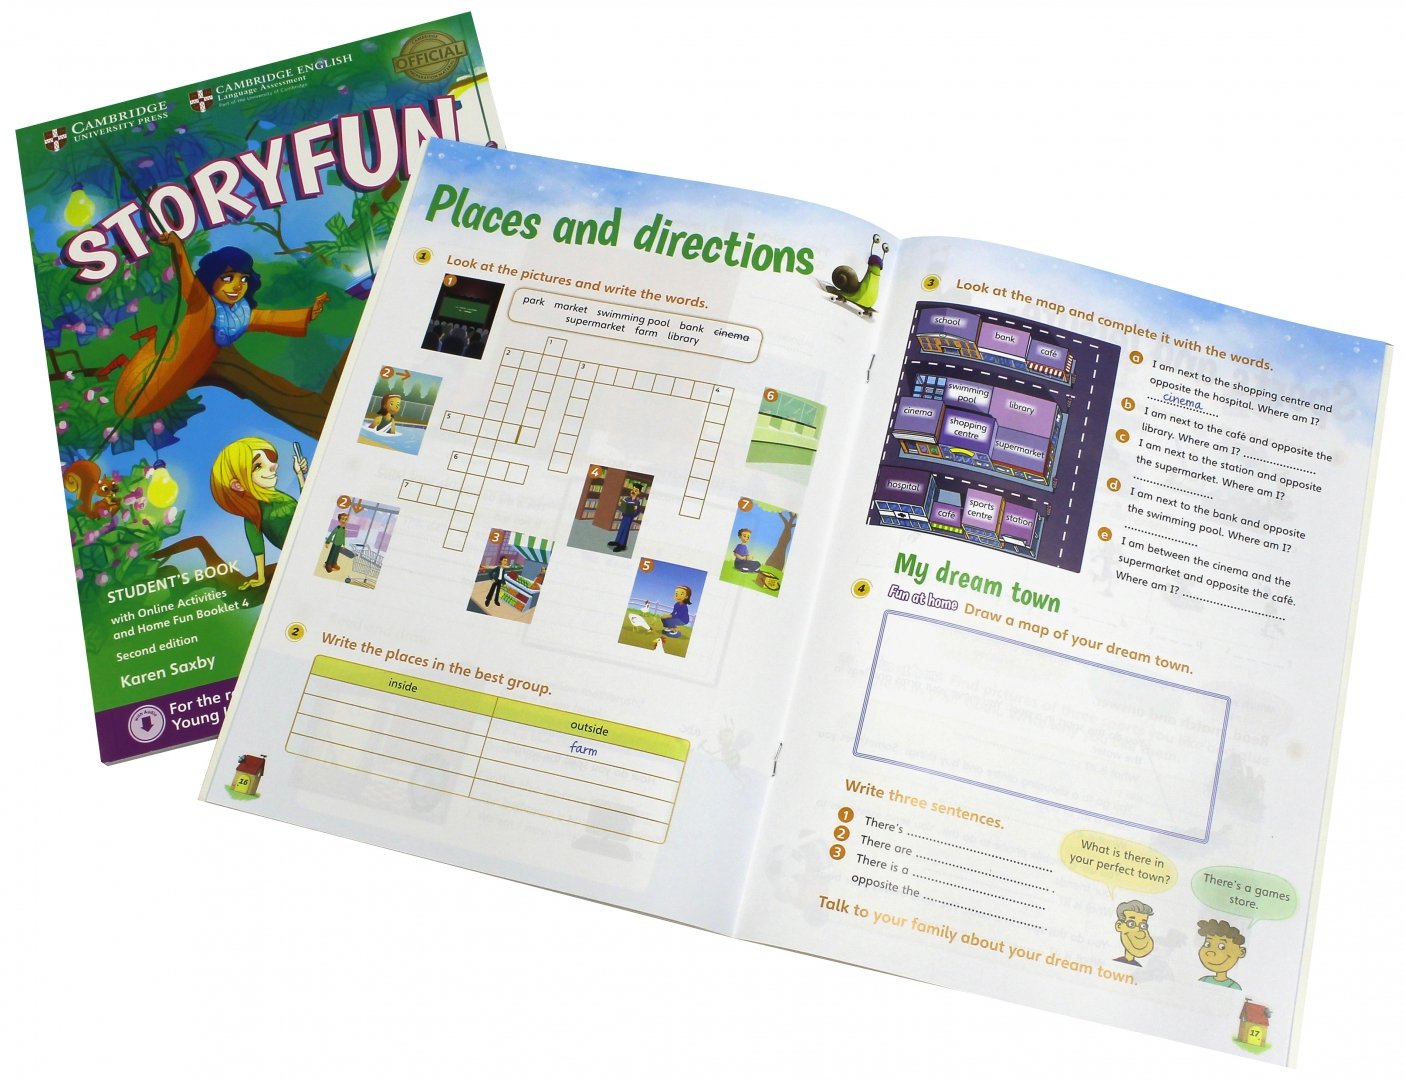 Home fun booklet. Storyfun 4. Storyfun for Flyers. Storyfun for Starters. Storyfun 1 student's book.